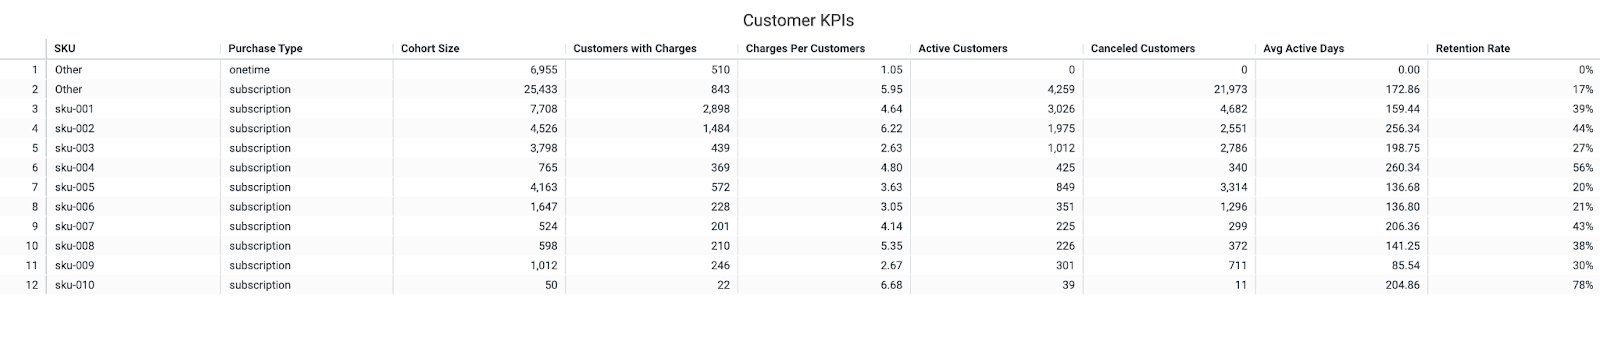 Customer KPIs in the enhanced analytics suite.